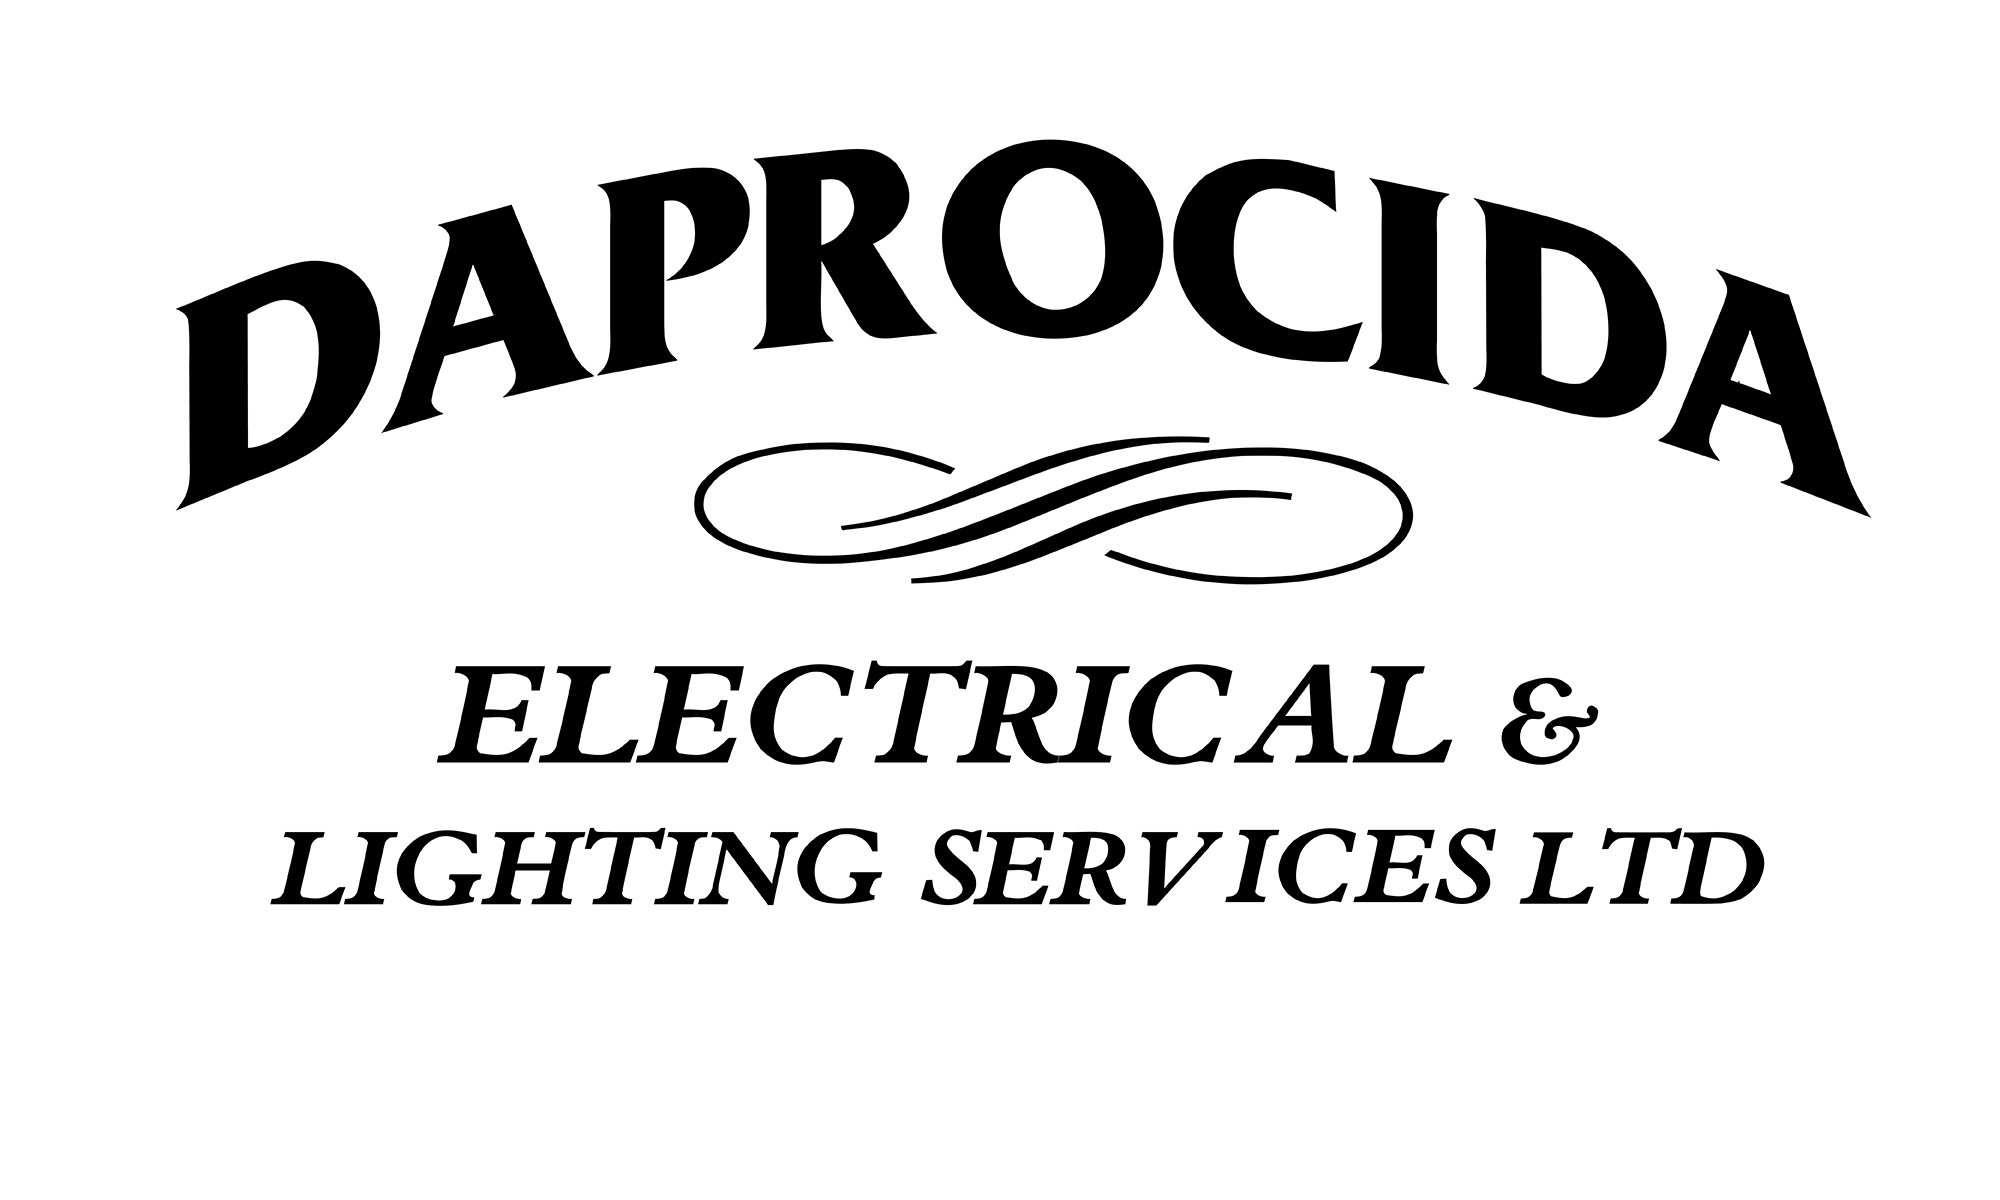 Daprocida Electrical